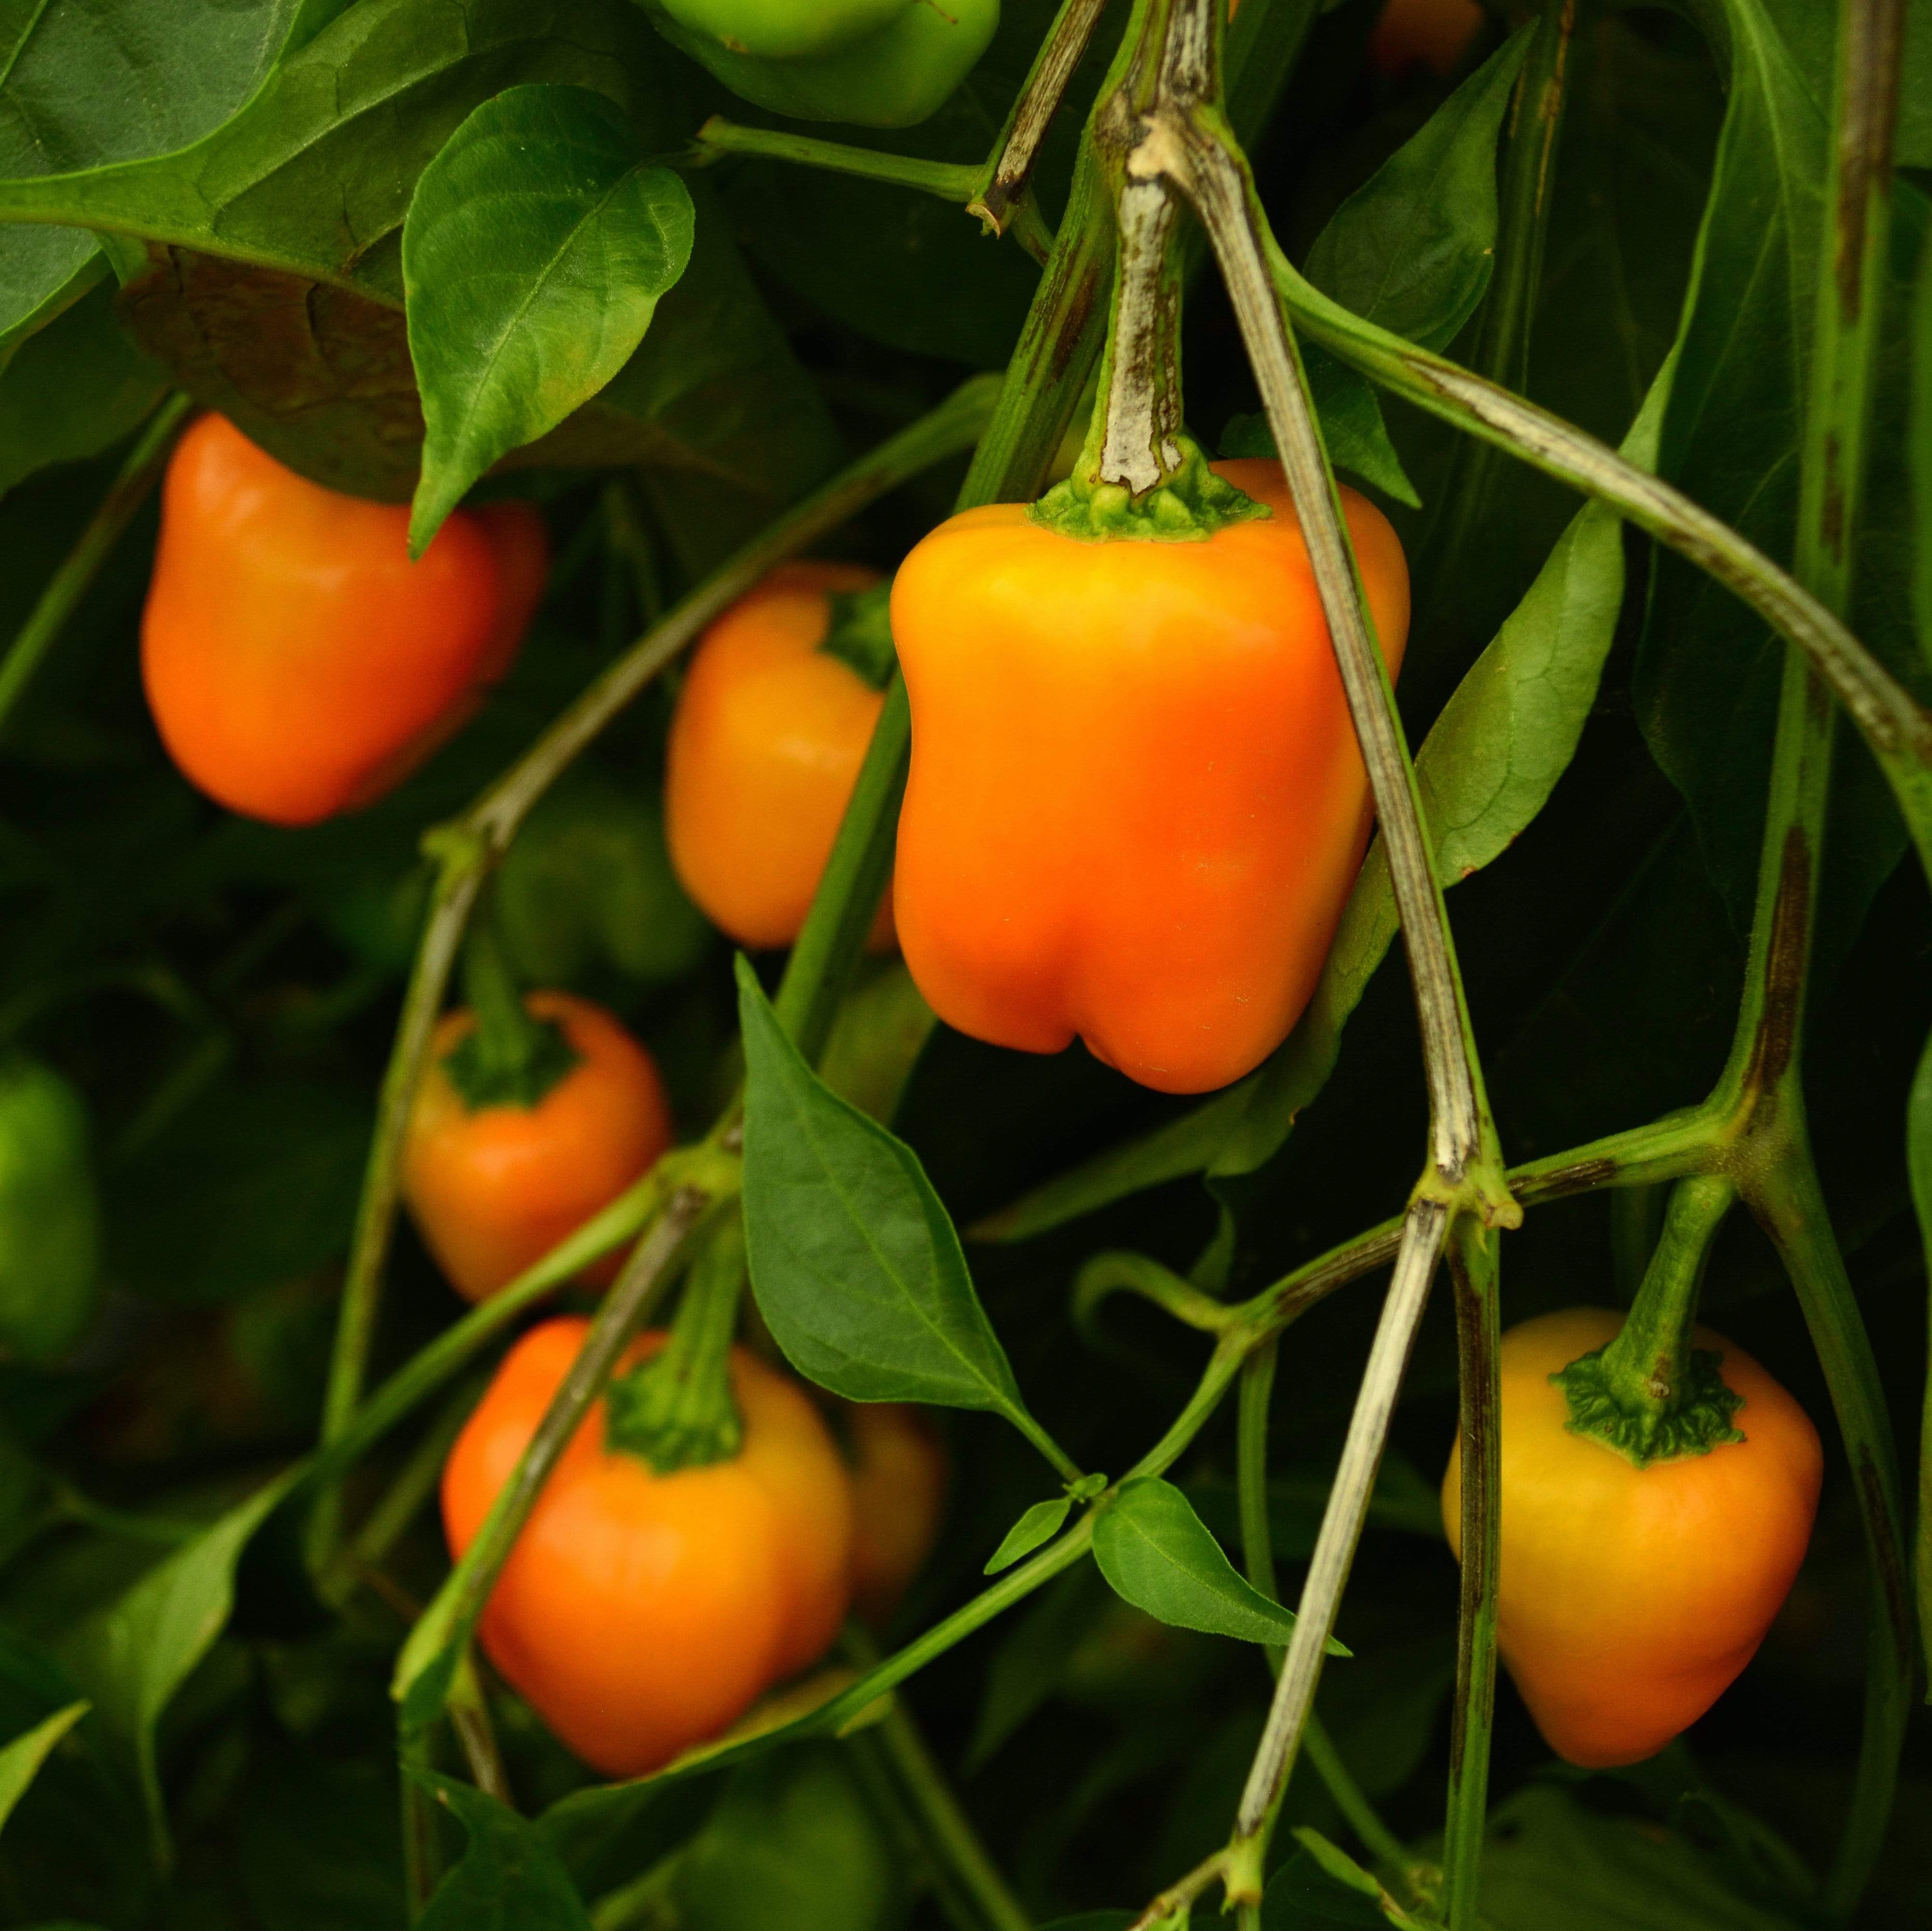 Orange Mini Bell Sweet Pepper Seeds